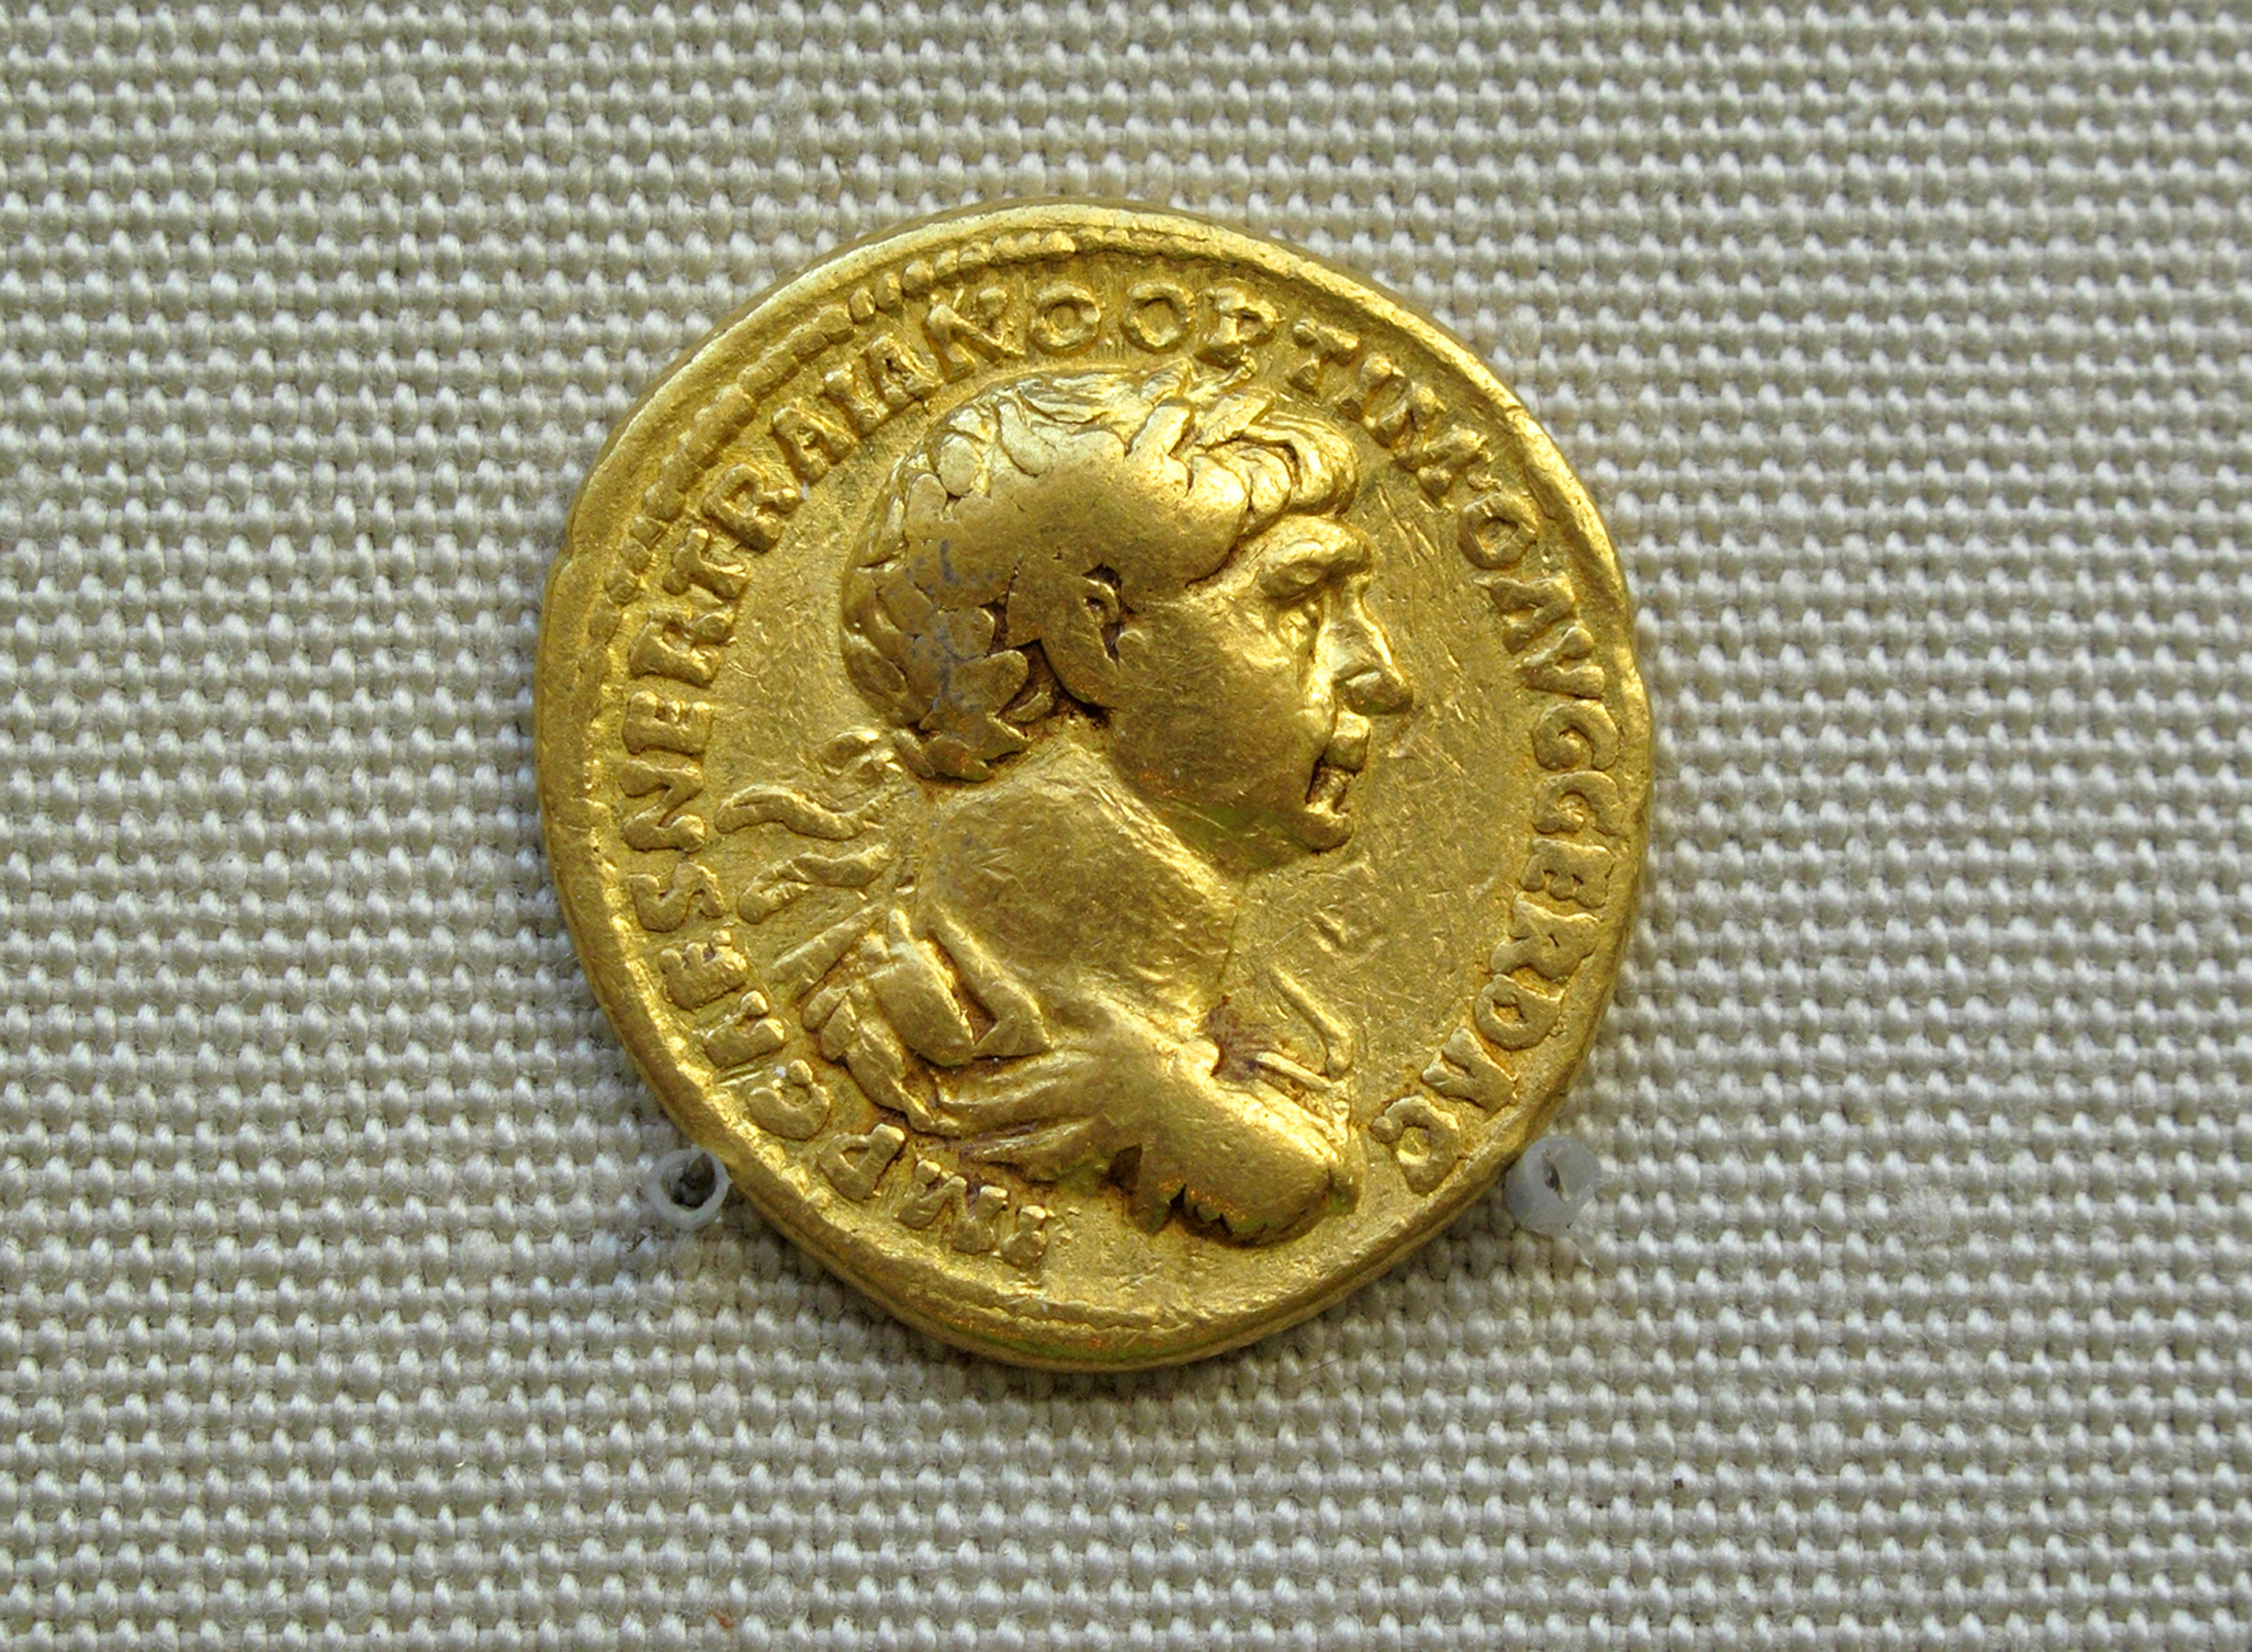 Gold Roman aureus coin of Roman emperor Trajan. Photo courtesy of DollarPhotoClub.com